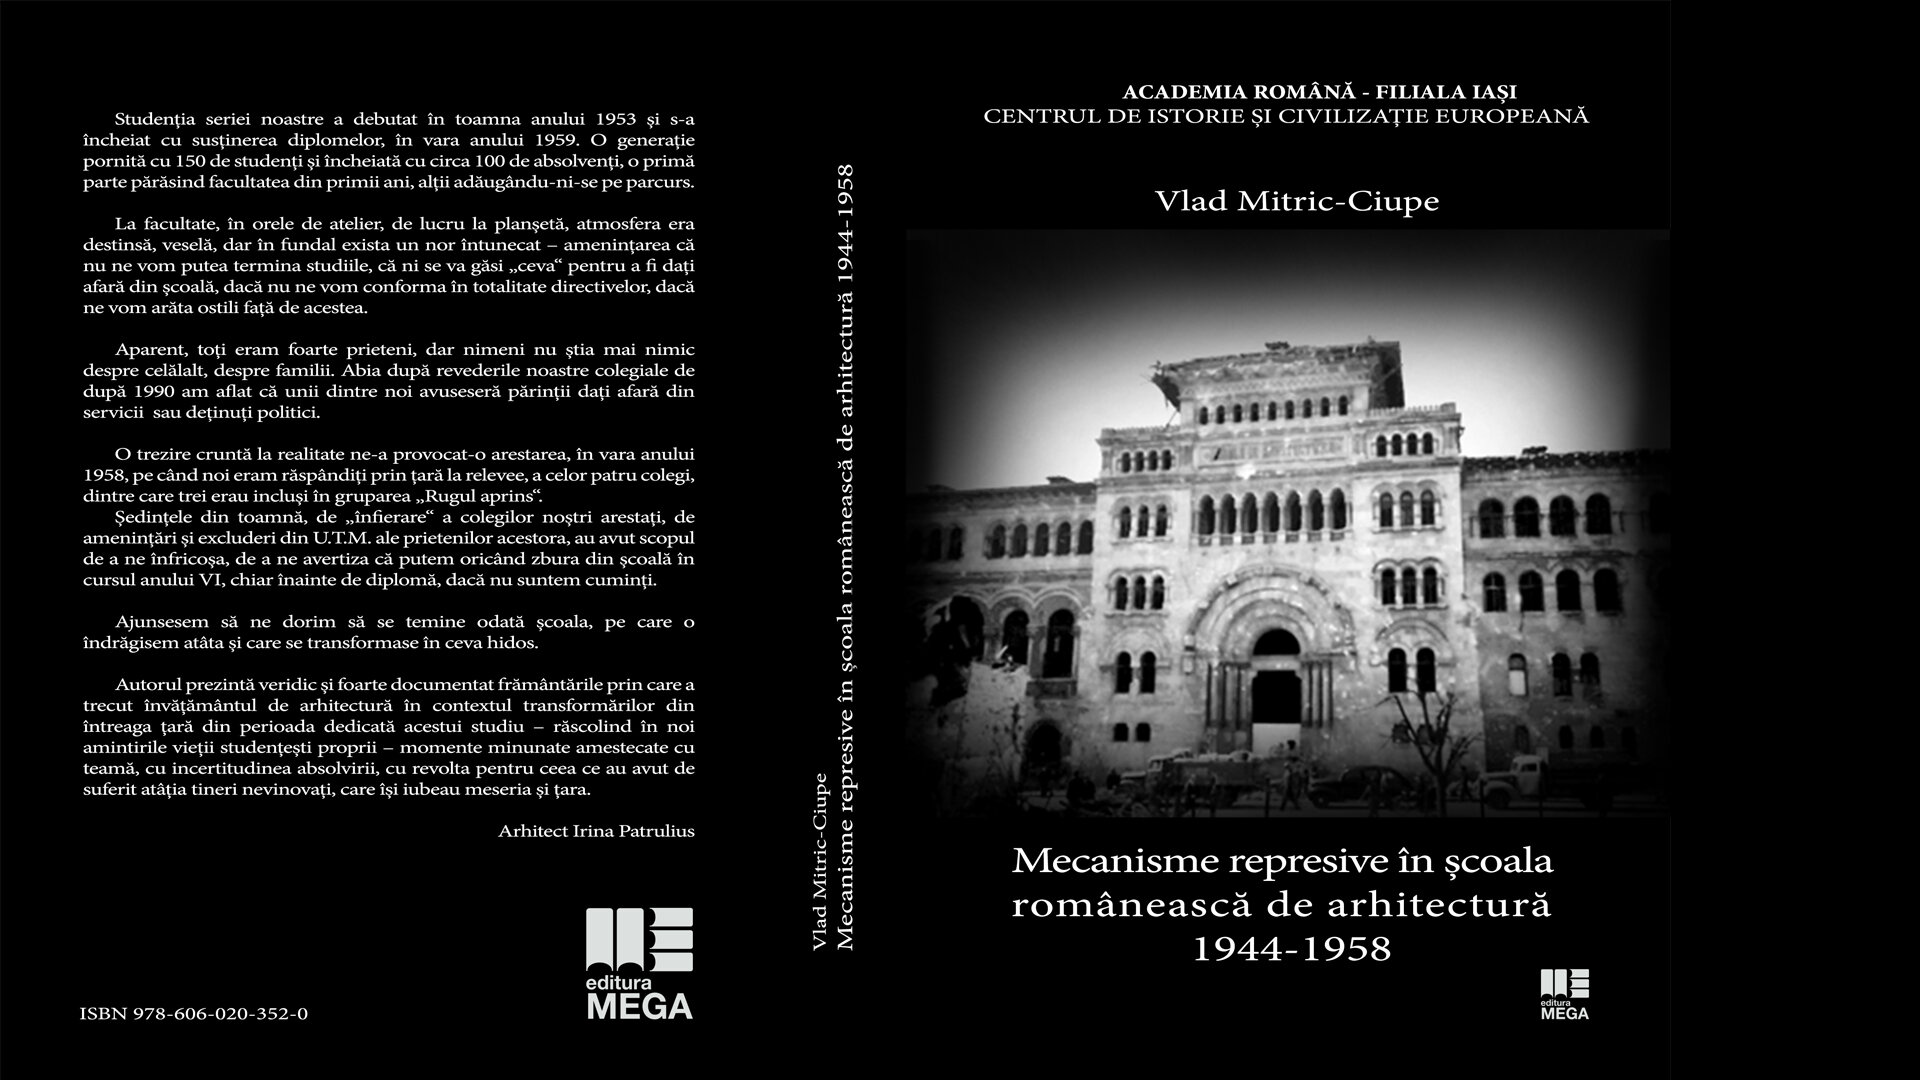 Repressive mechanisms at the romanian school of architecture 1944-1958